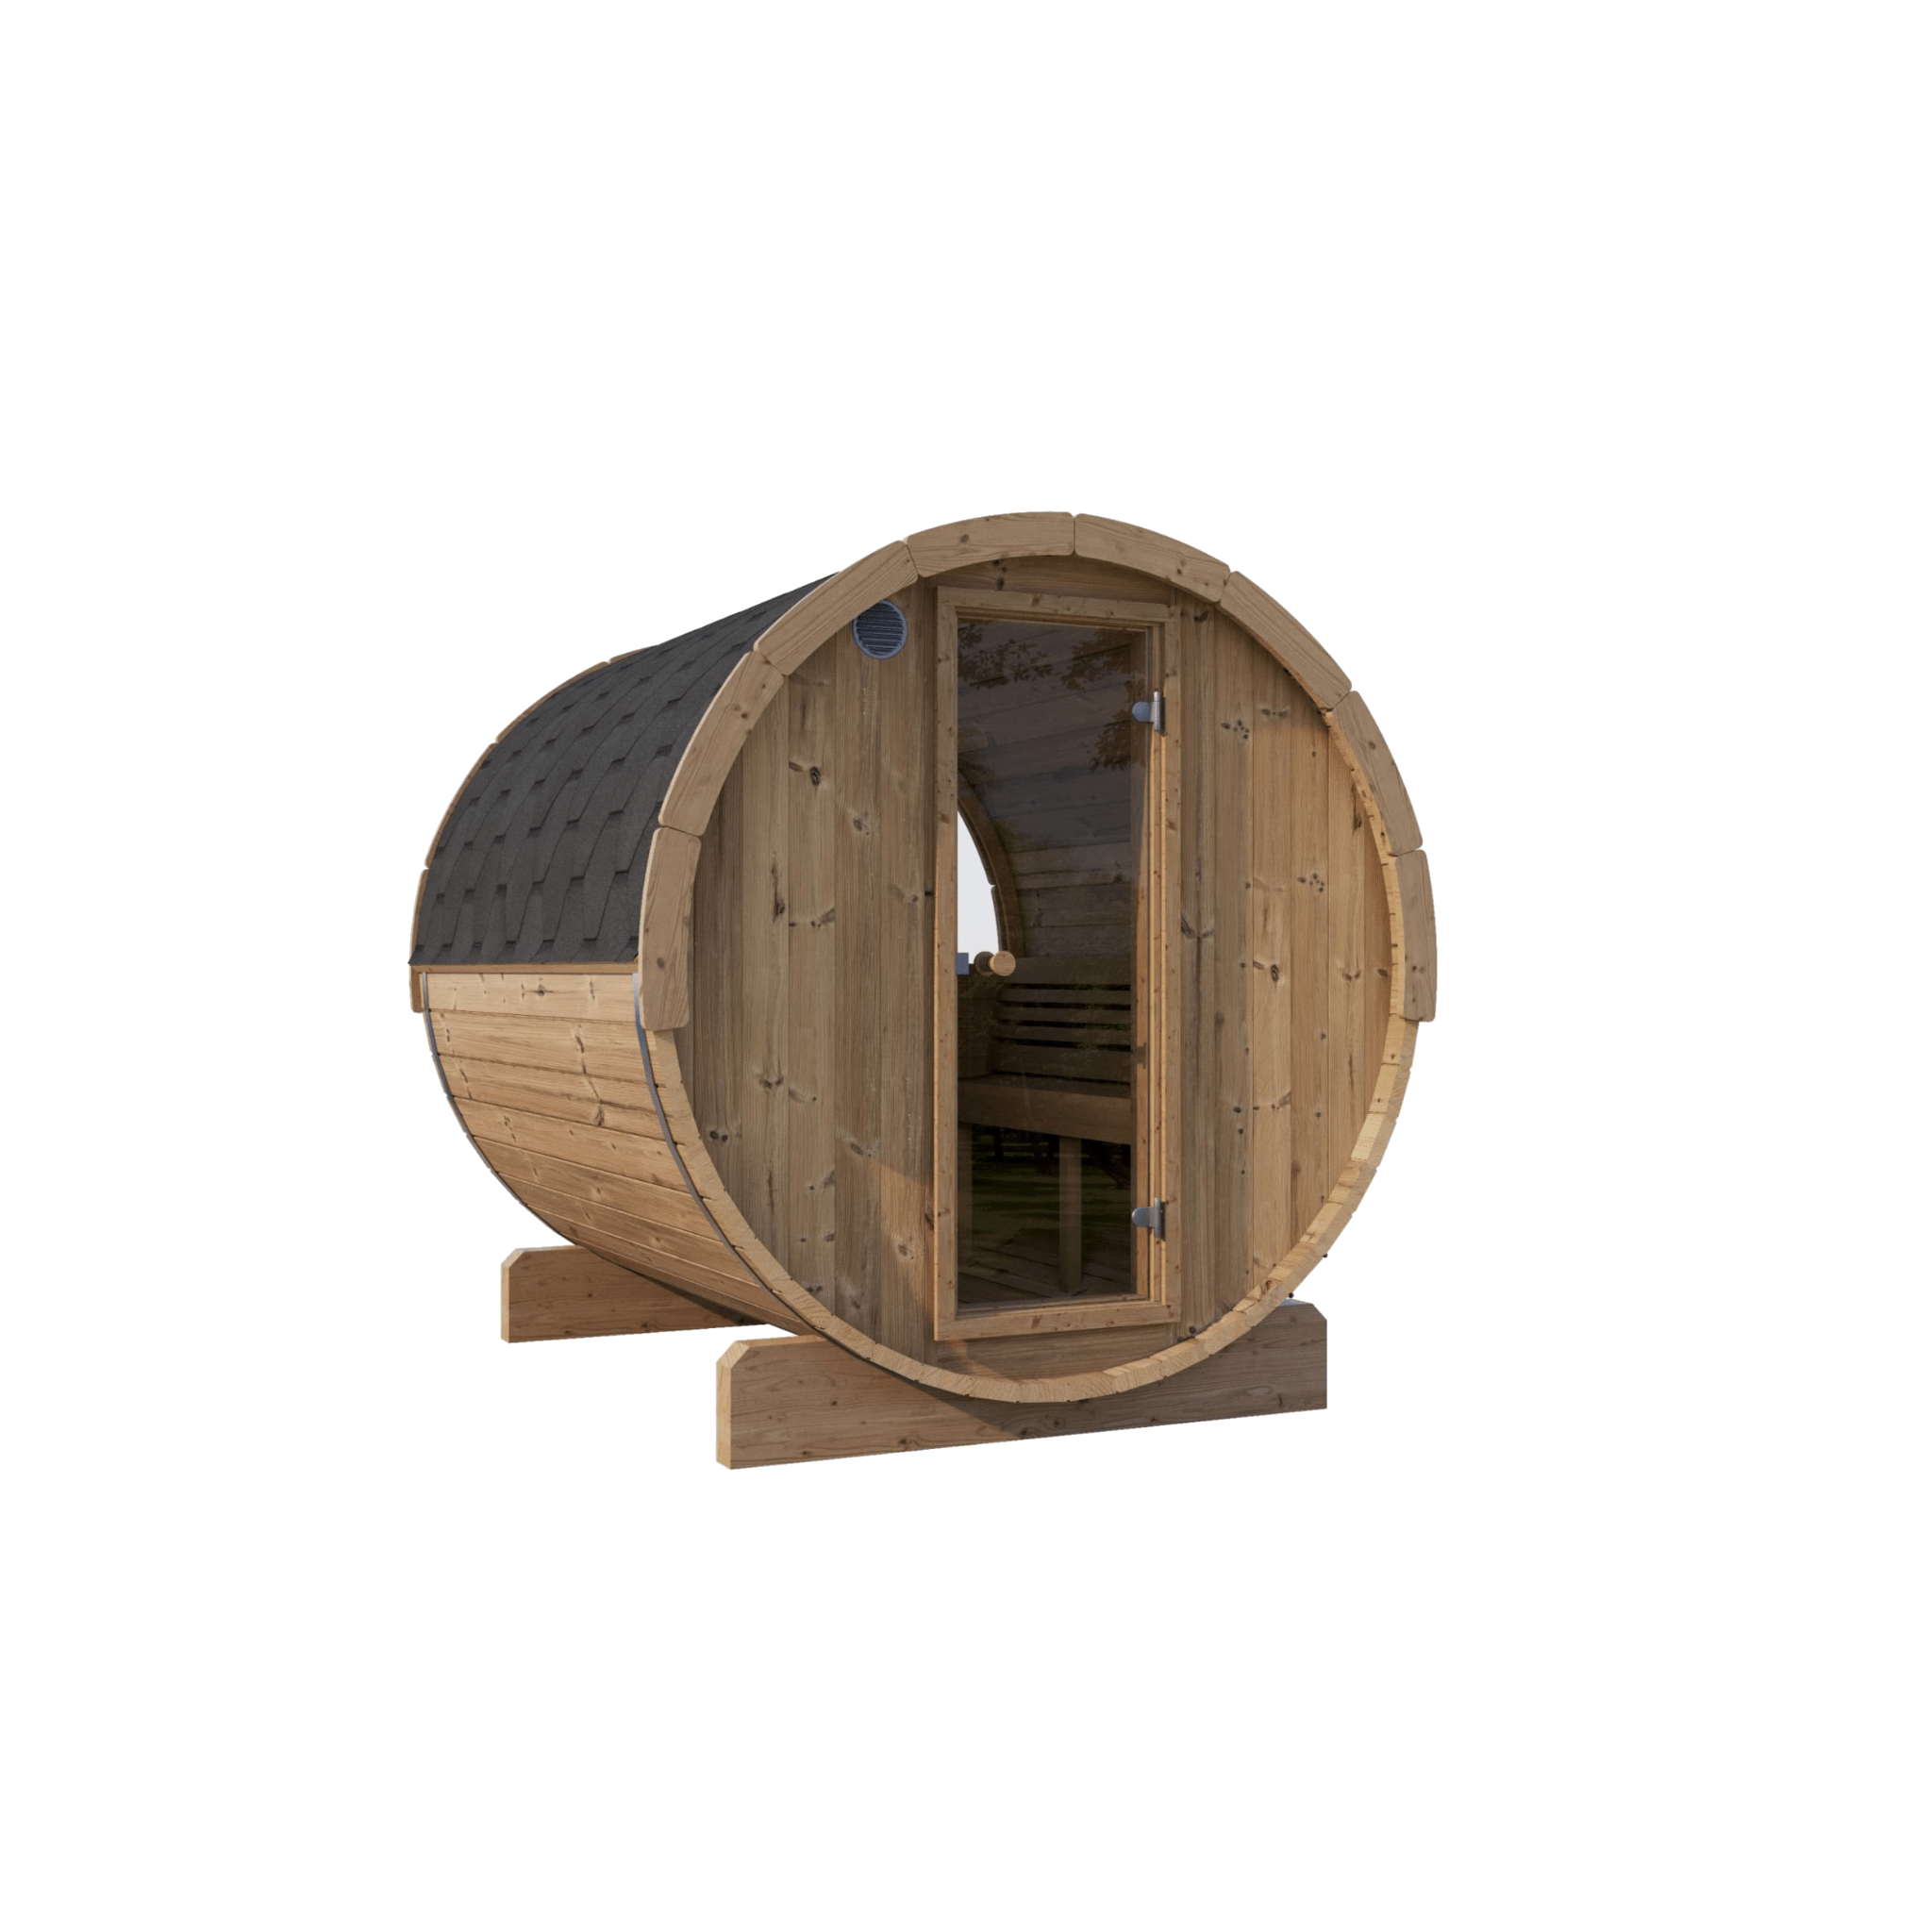 SaunaLife SL-MODELE6W 810127970885 Traditional Sauna SaunaLife Model E6W 3 Person with Back Window Barrel Sauna